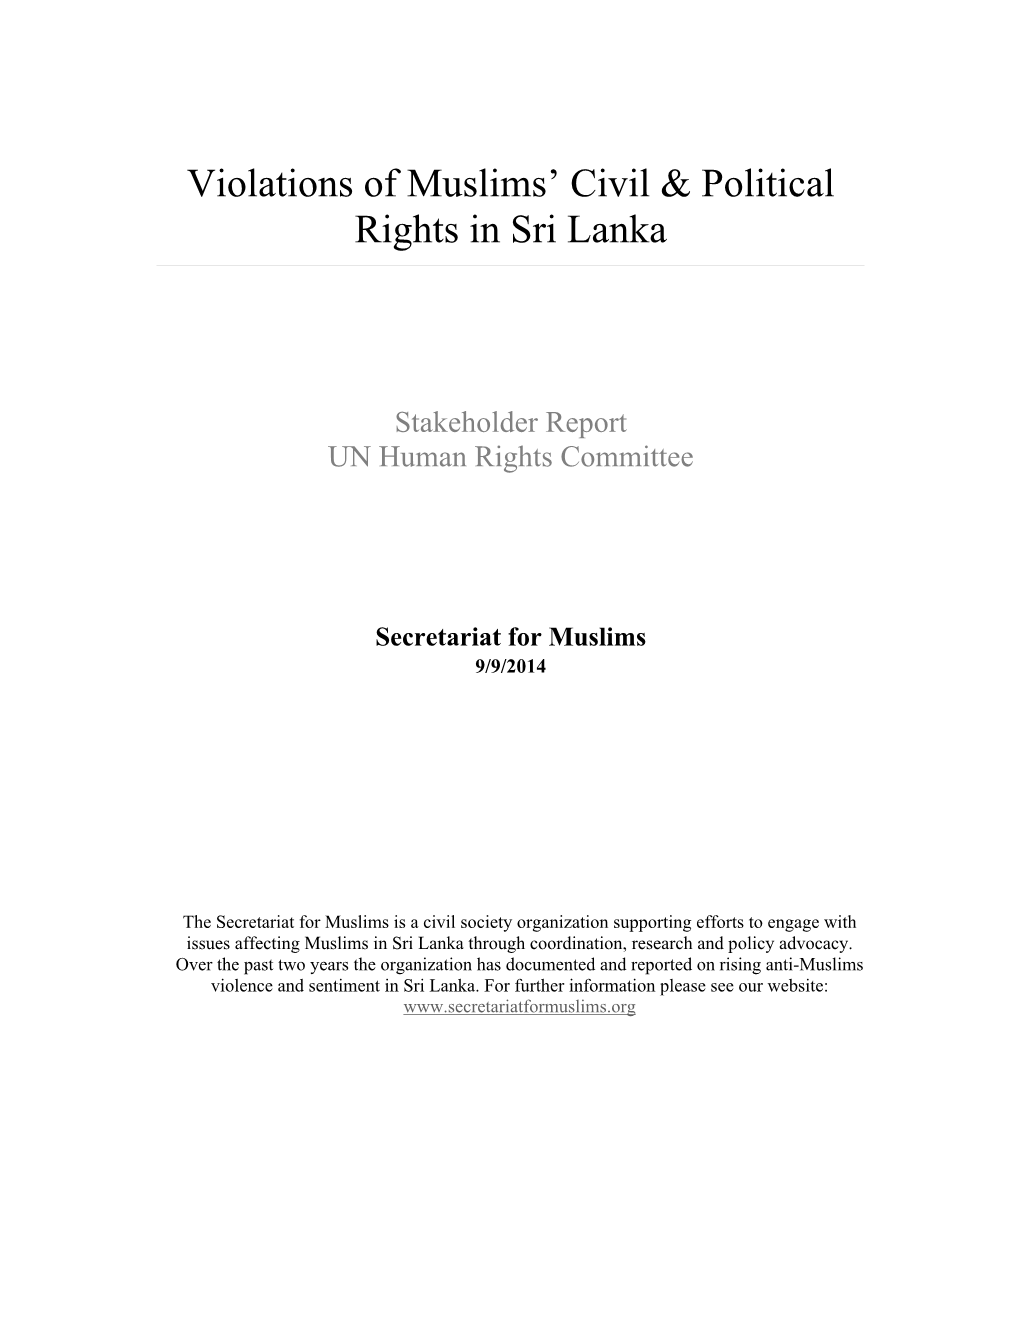 Violations of Muslims' Civil & Political Rights in Sri Lanka